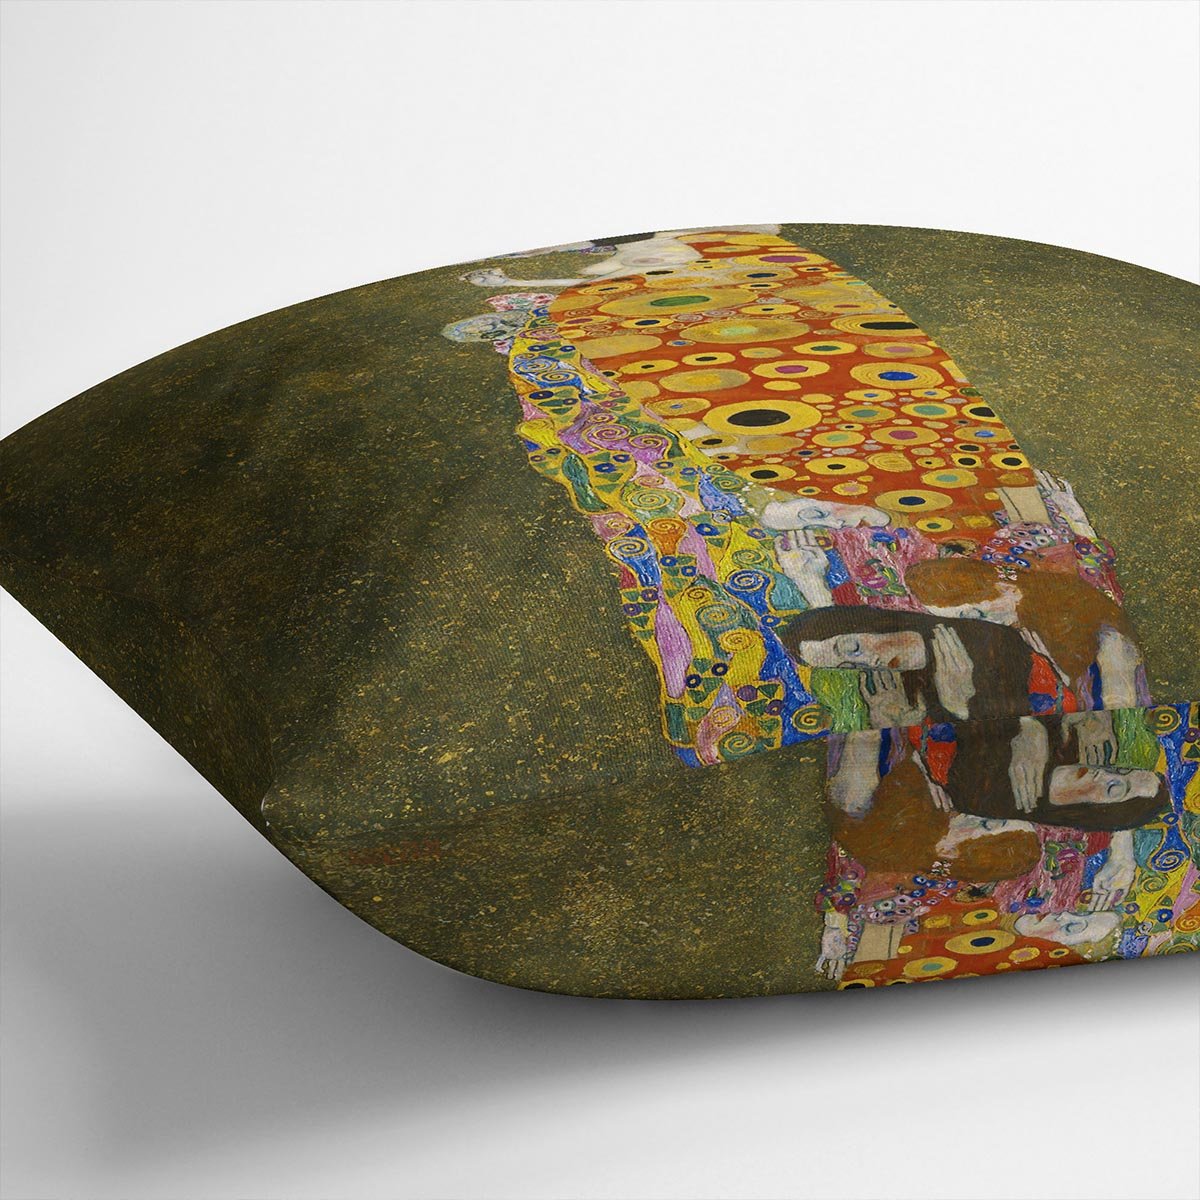 Hope II by Klimt Throw Pillow